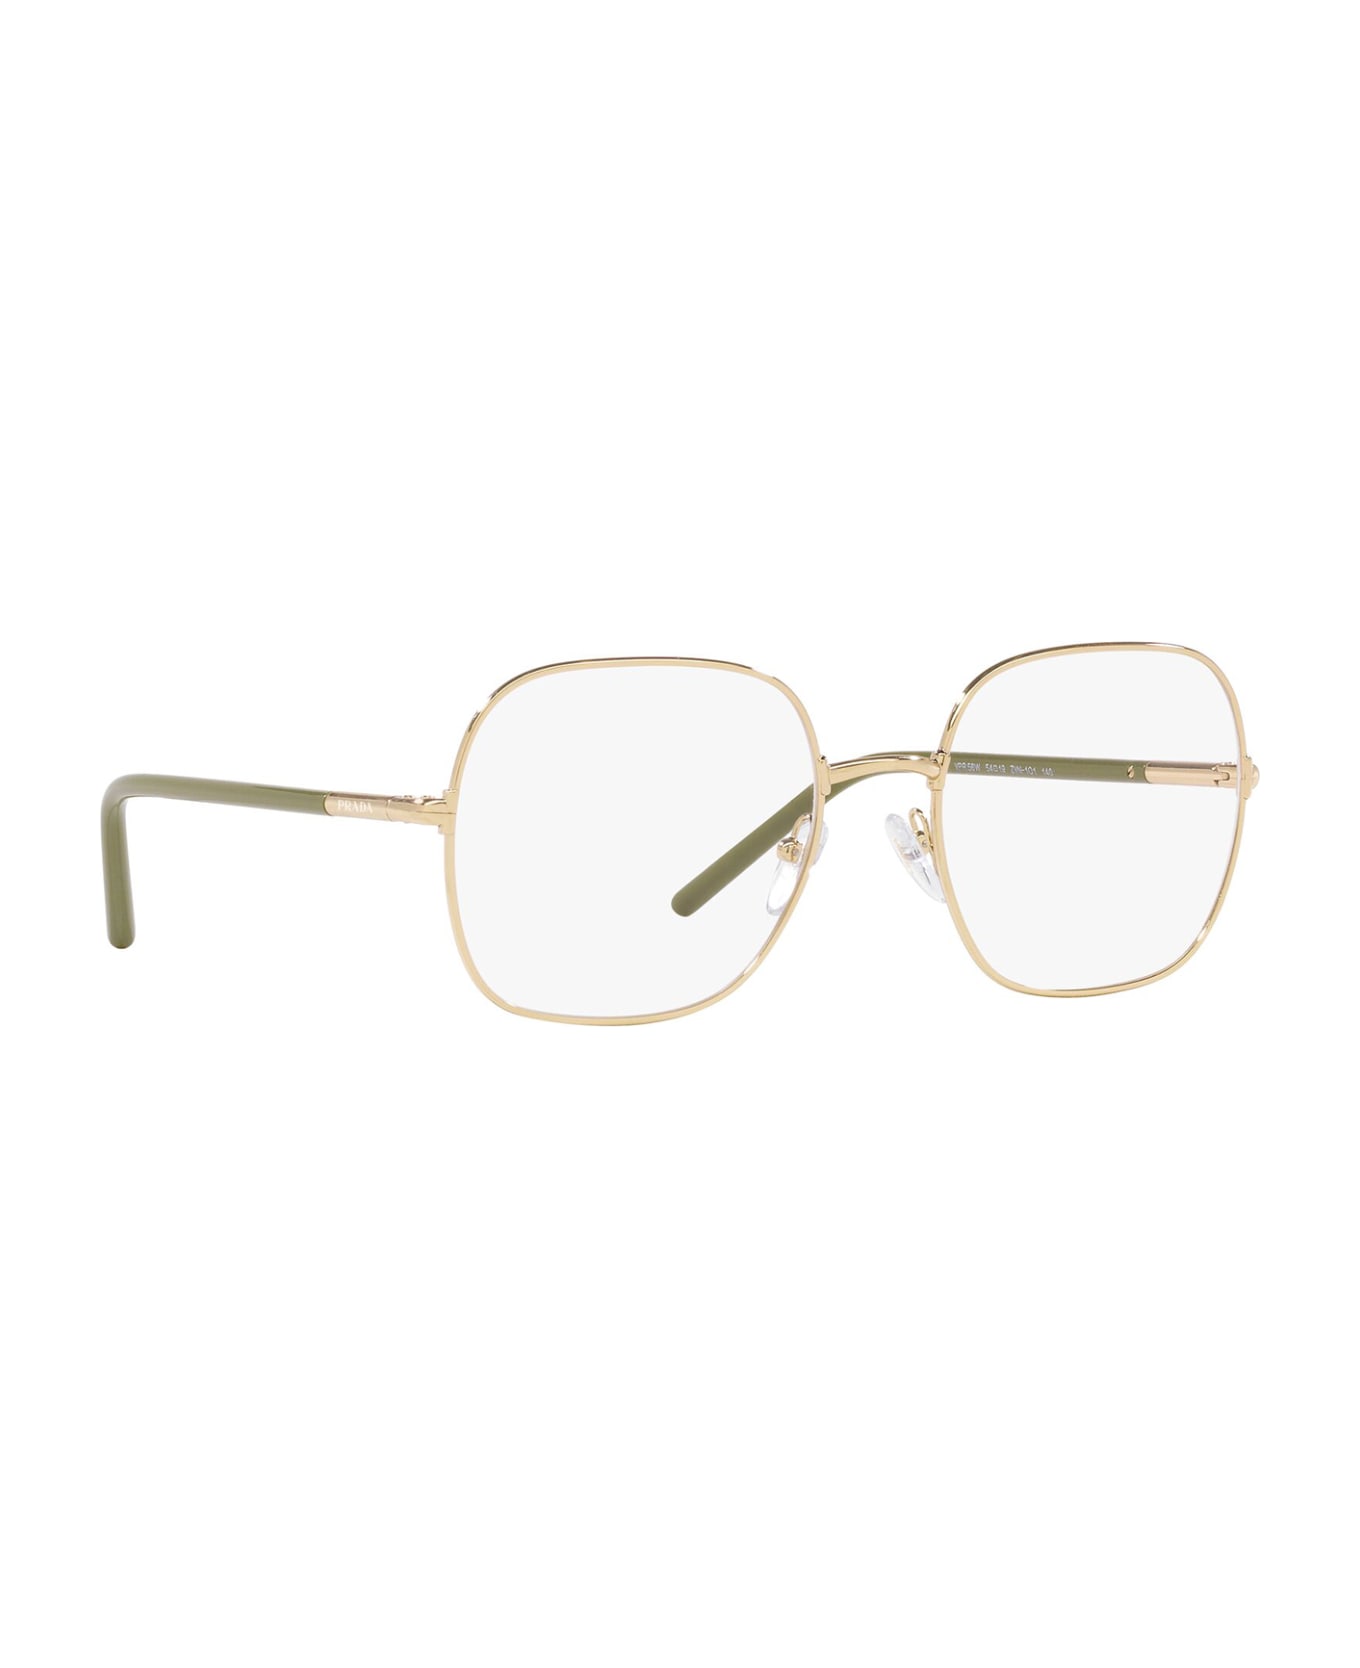 Prada Eyewear Pr 56wv Pale Gold Glasses - Pale Gold